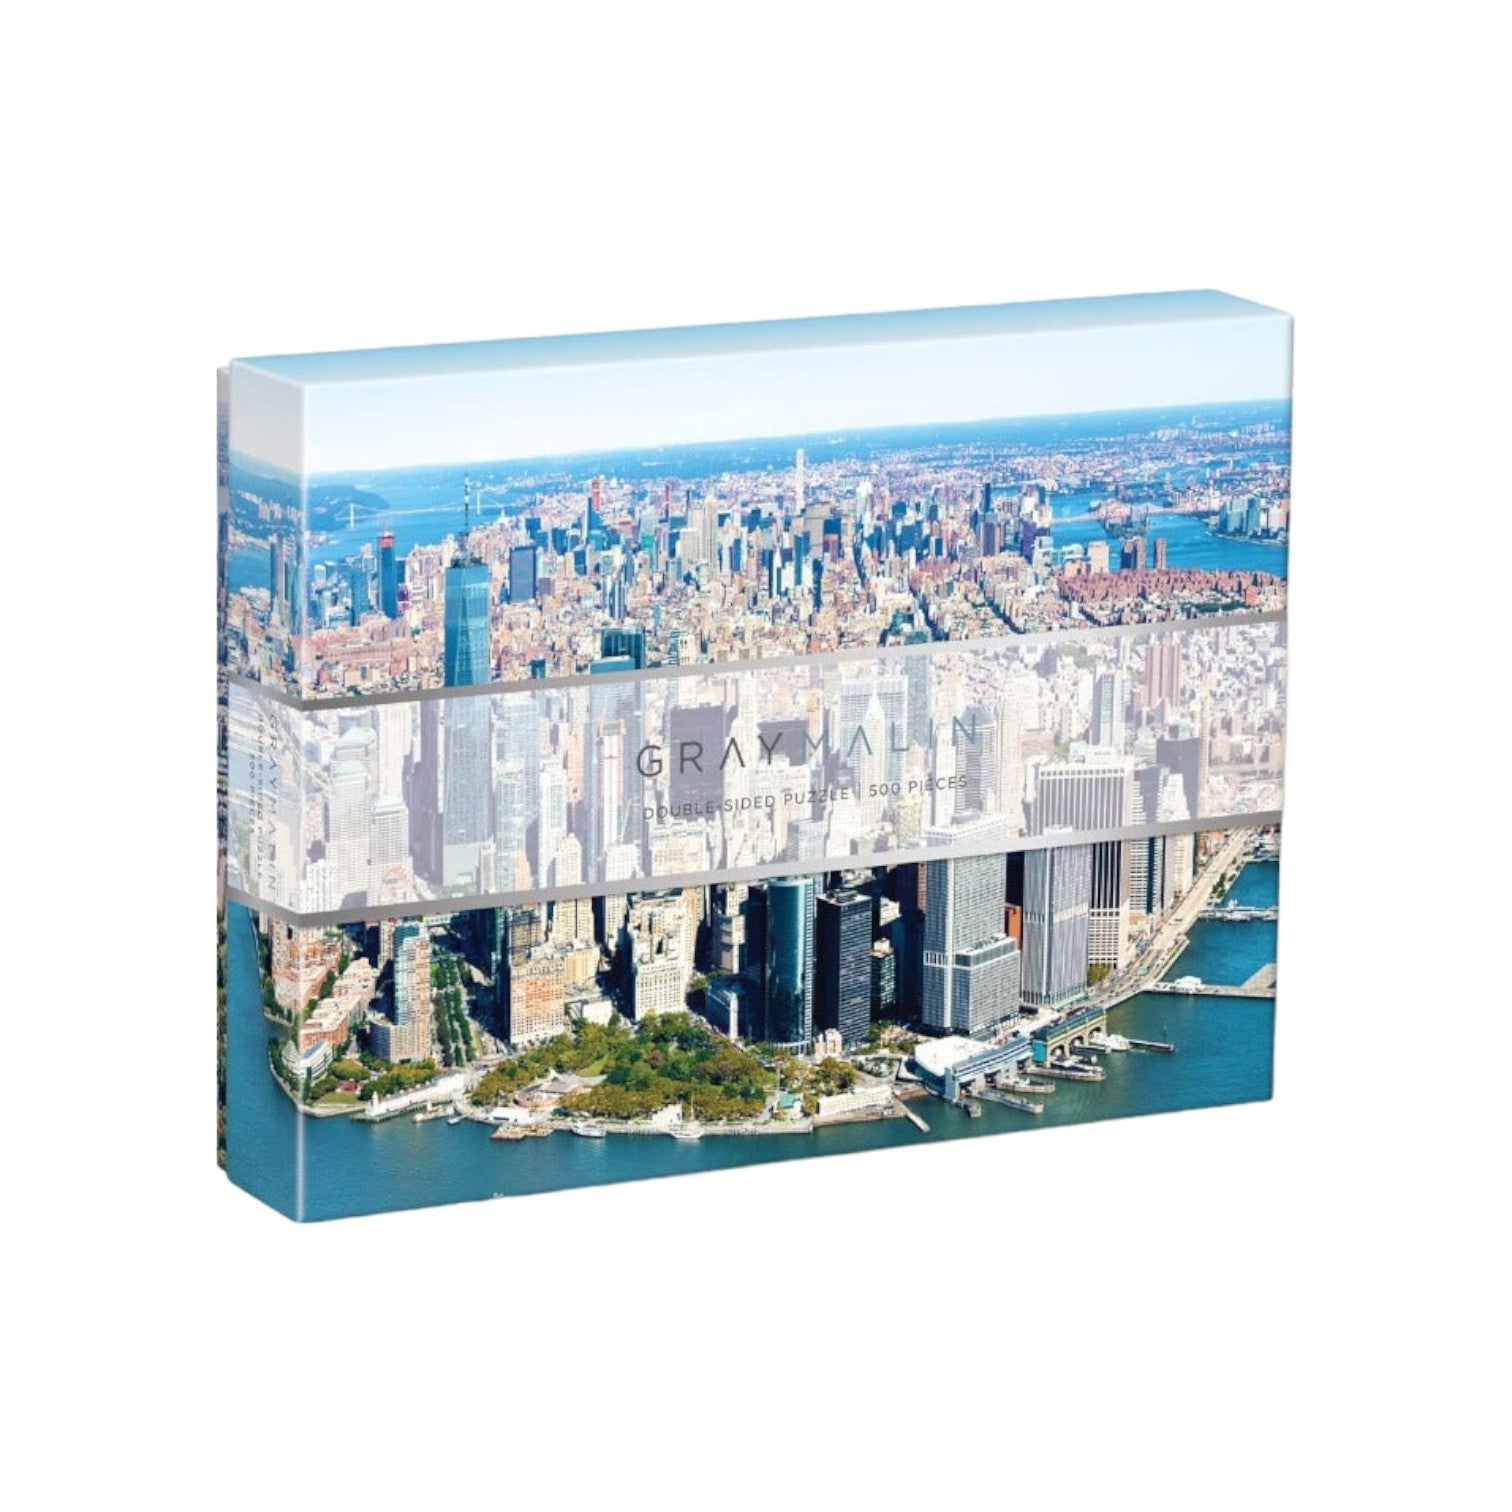 Galison - Dubbelzijdige puzzel 'New York City' (500 stukjes)